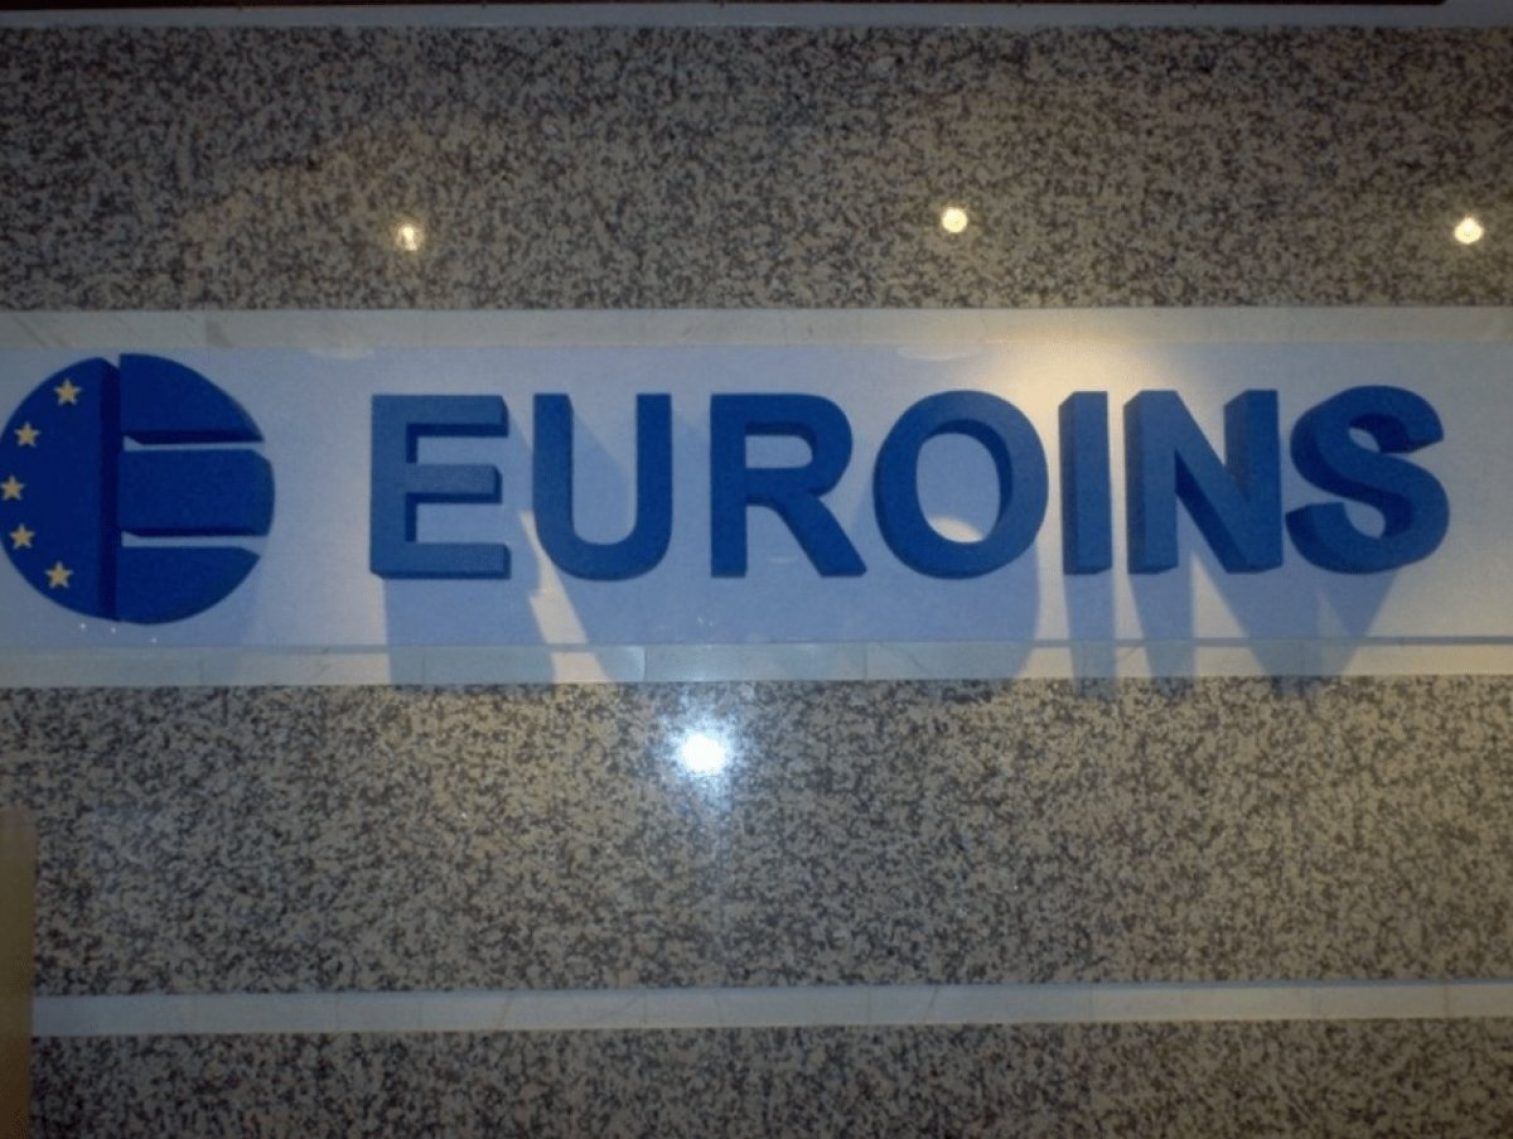 Euroins